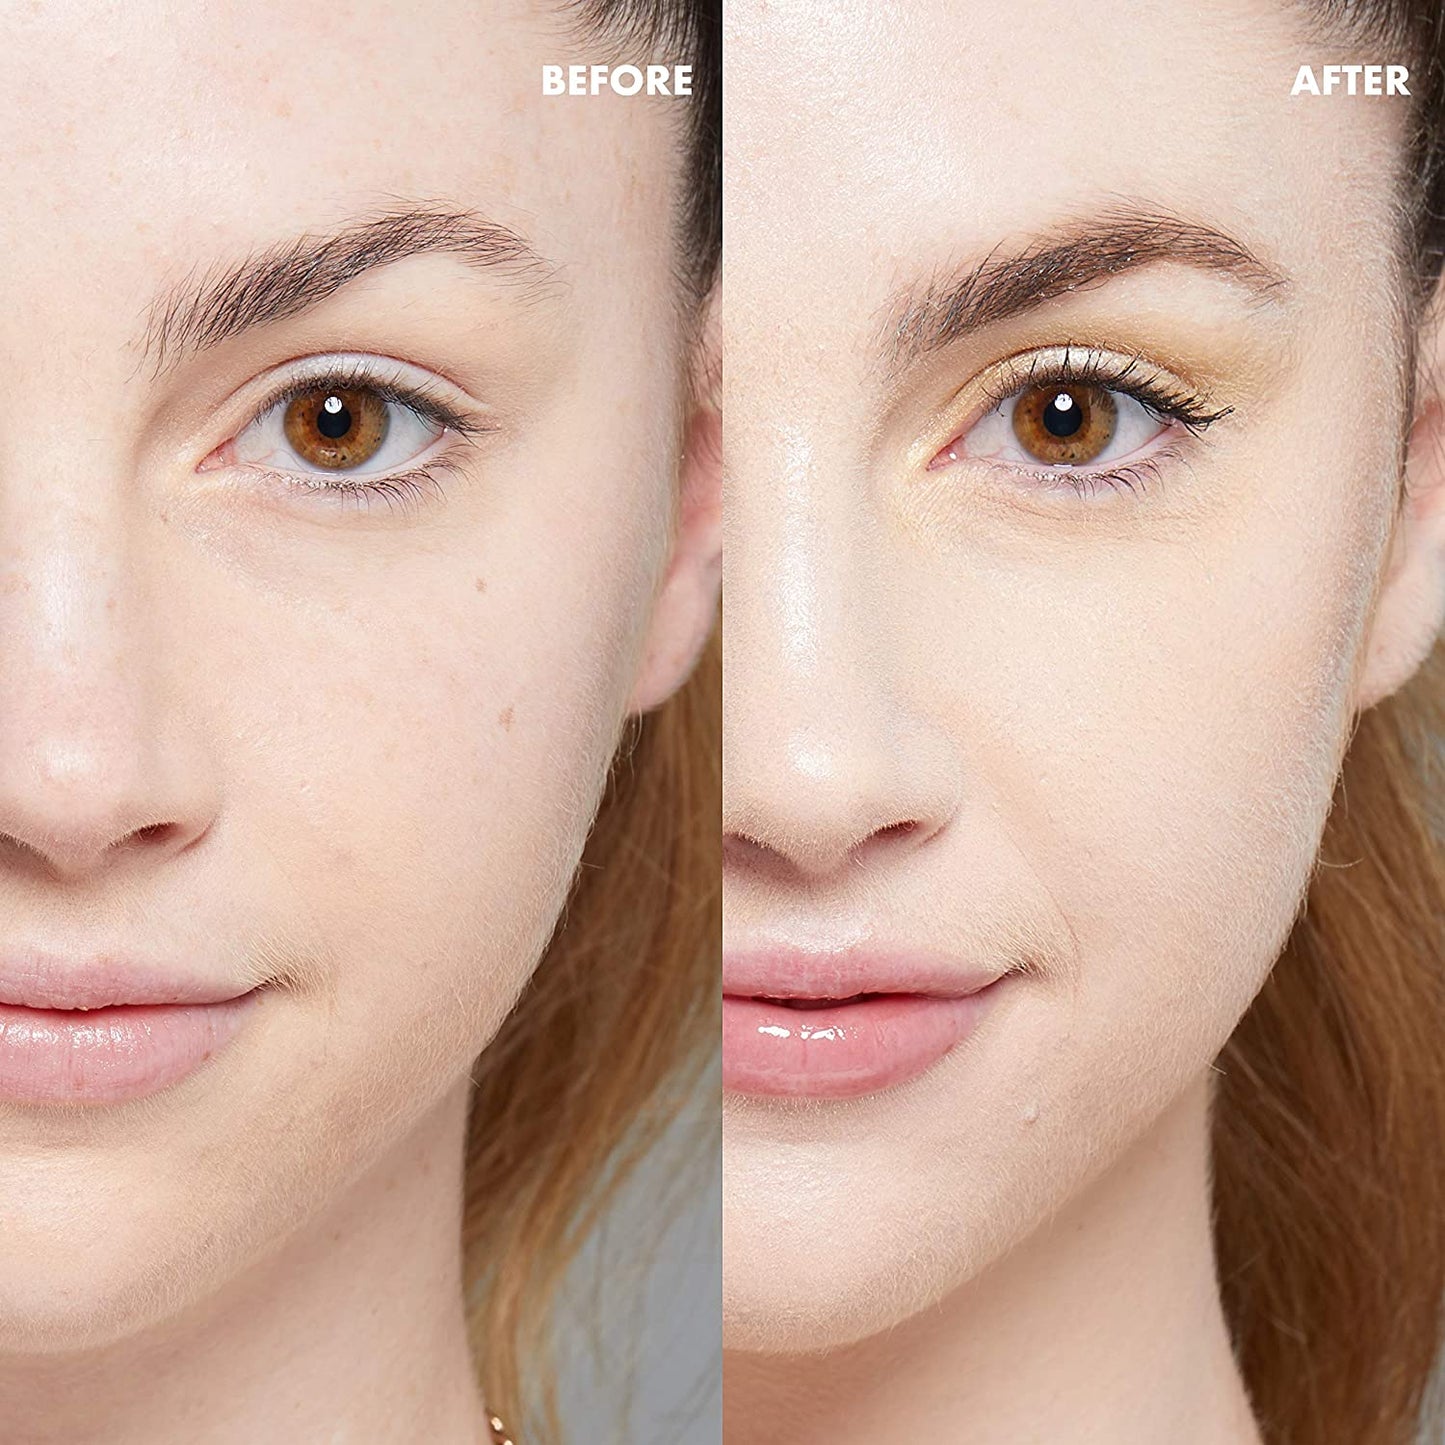 NYX Honey Dew Me Up Primer Face Makeup, 0.74 fl.oz / 22ml